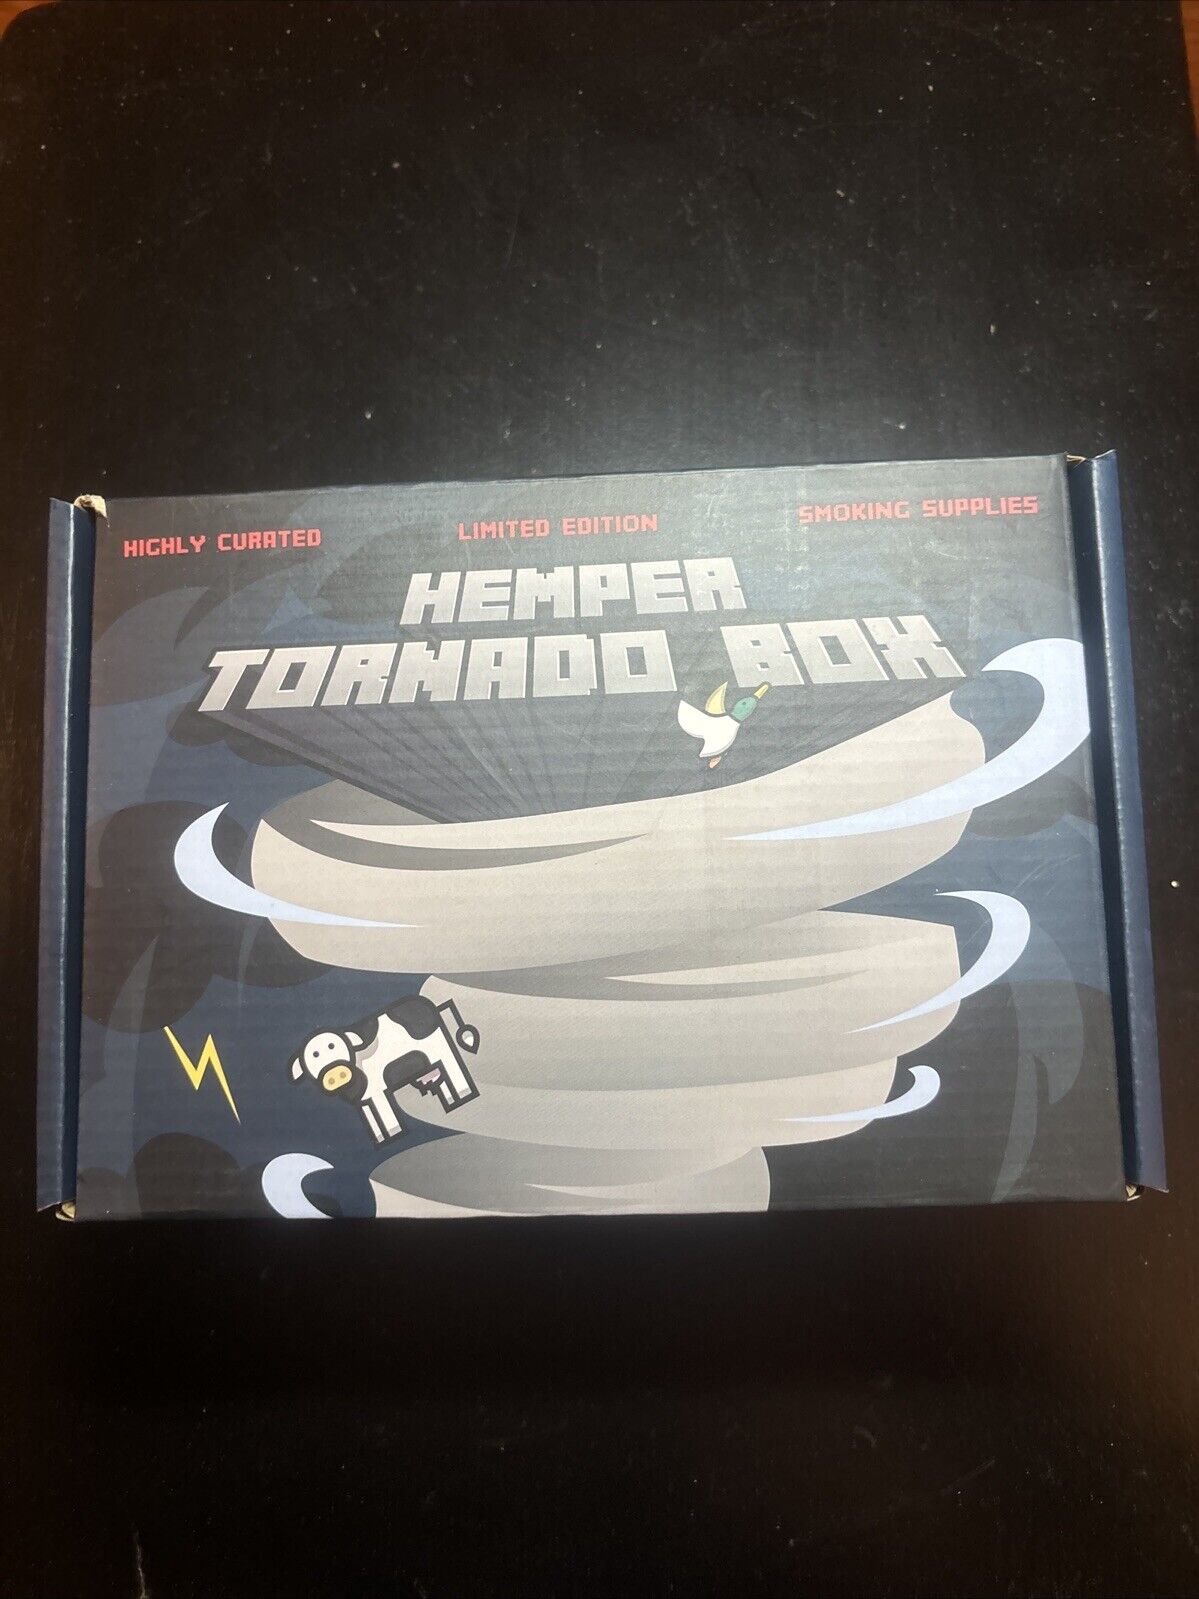 Hemper 7” Tornado Box (Empty)